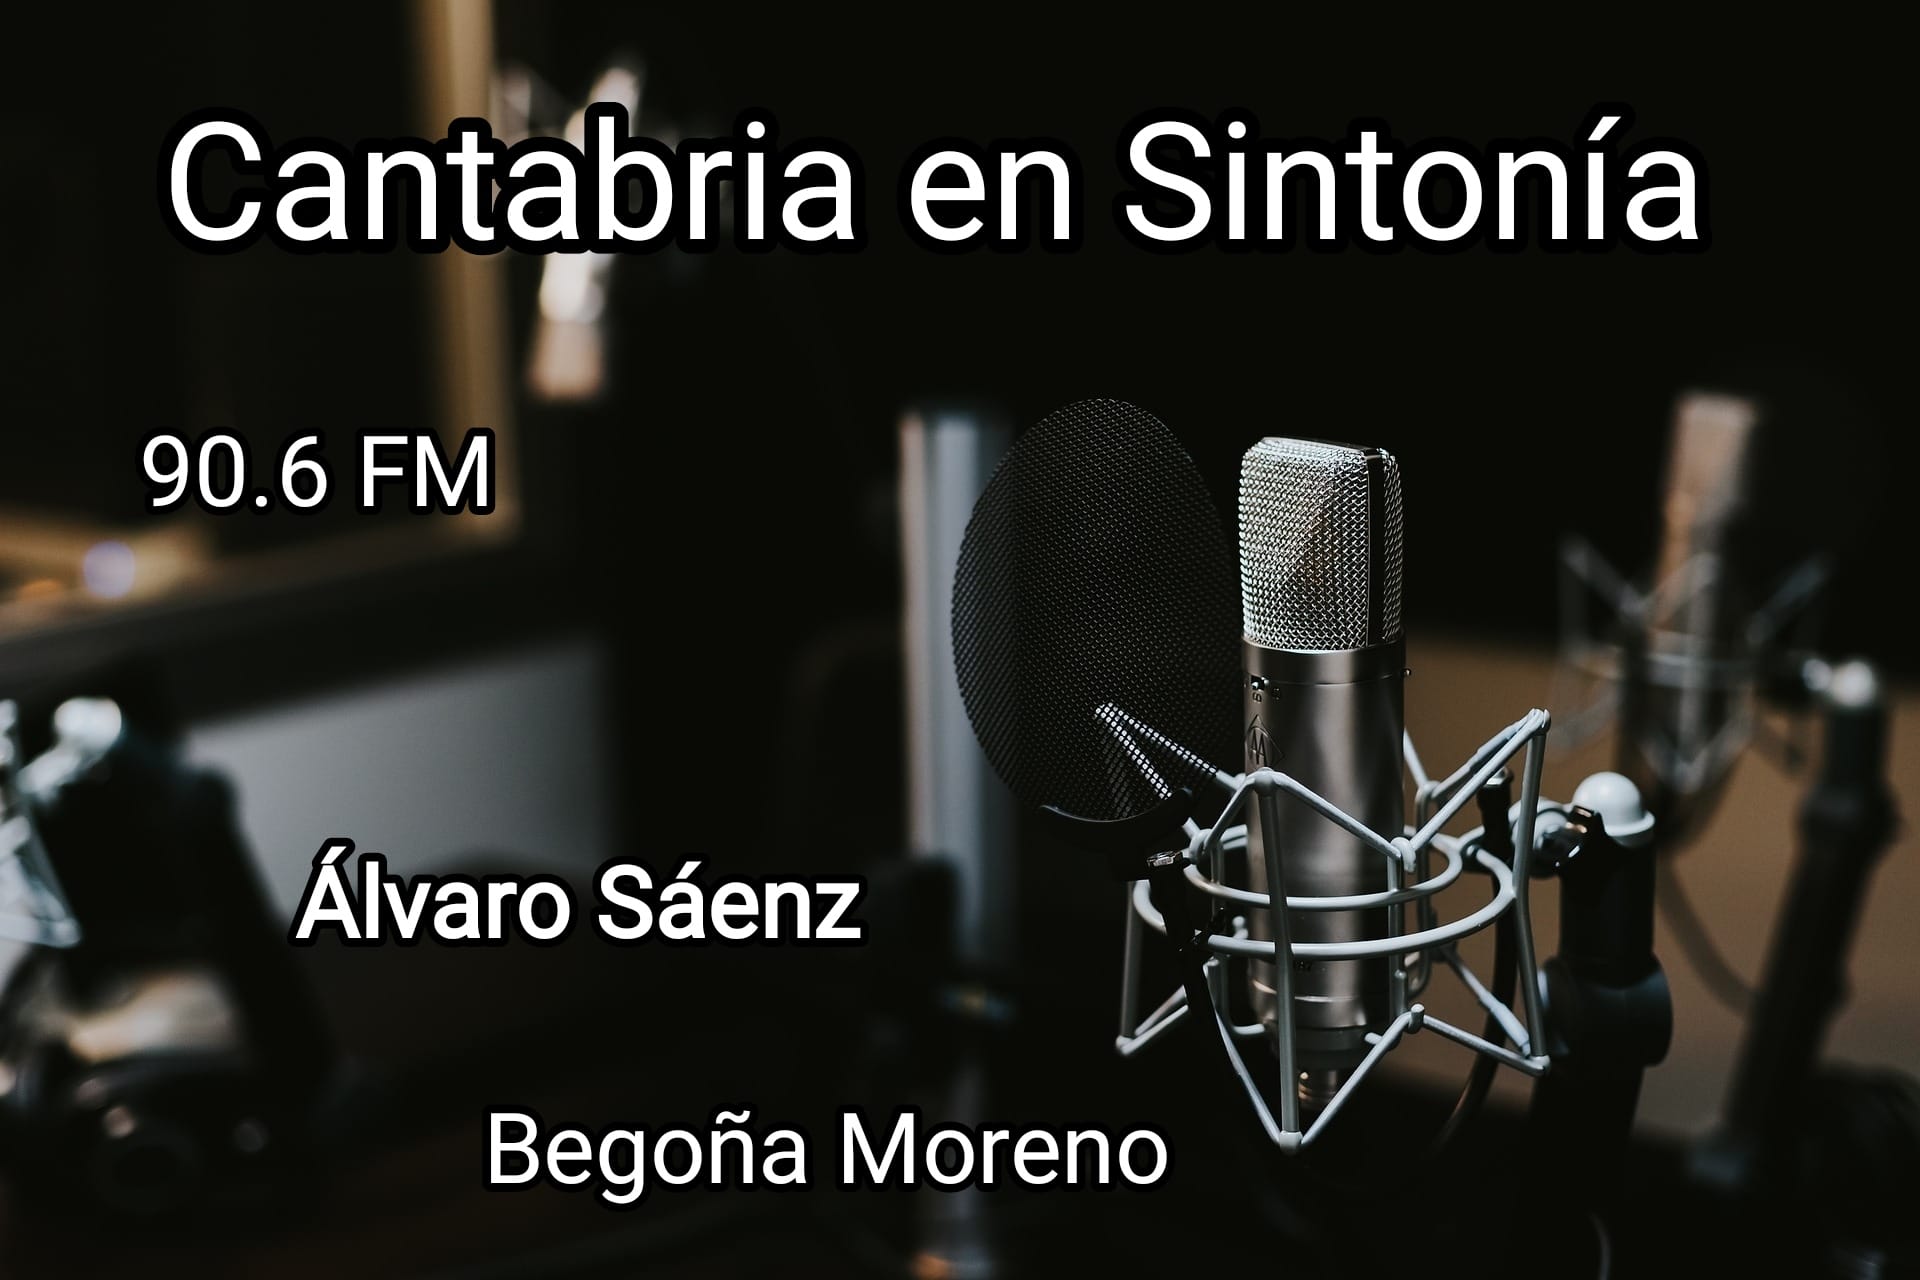 Cantabria en Sintonía en Mix FM. Martes 02-08-2022